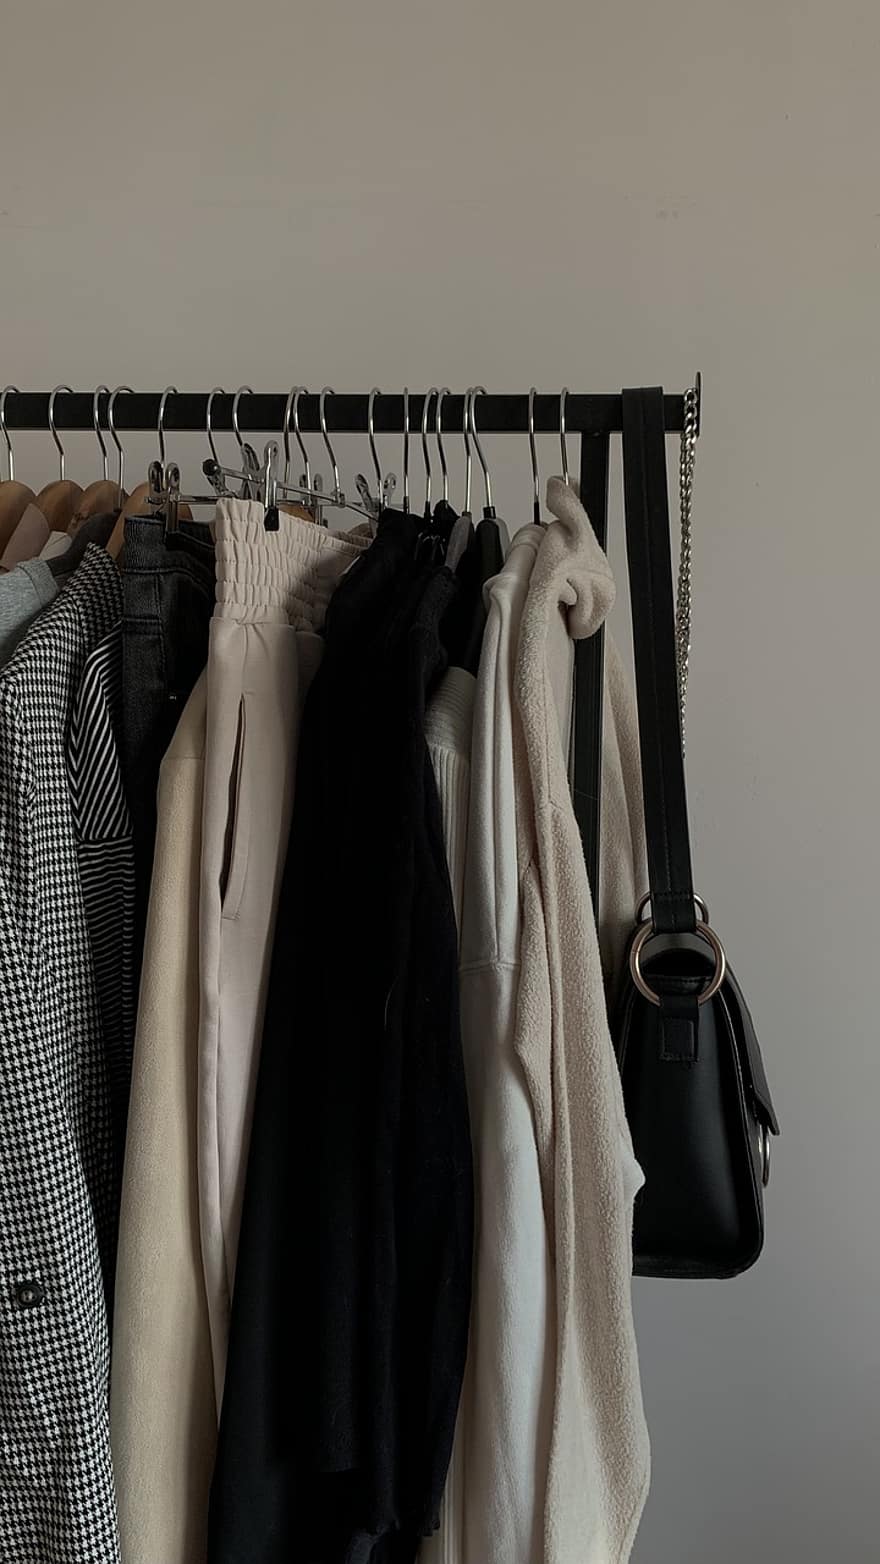 Clothes, Hanger, Clothing Rack, Clothes Rack, Garments, Jacket, Pants, Bag, Fashion